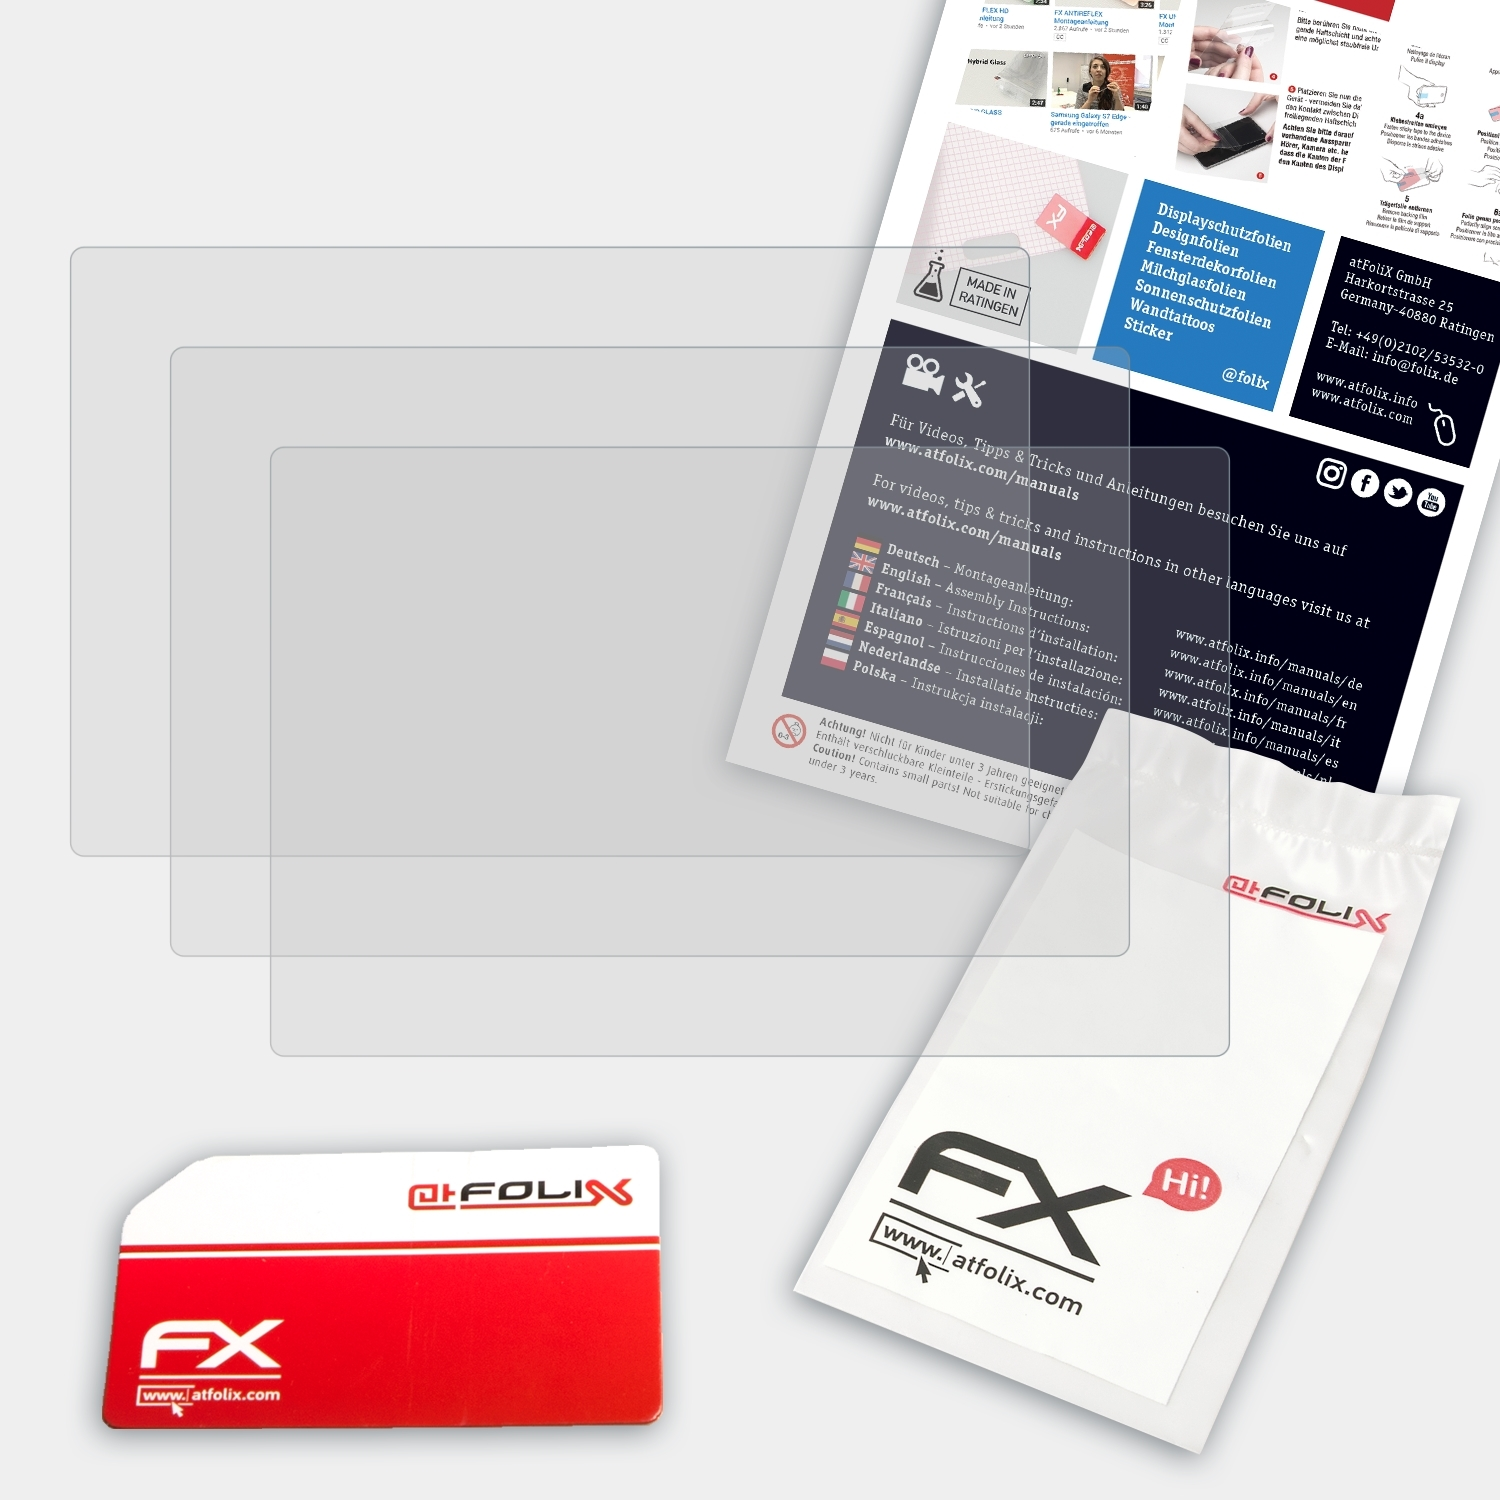 ATFOLIX 3x FX-Antireflex Displayschutz(für Fujifilm X-E3)